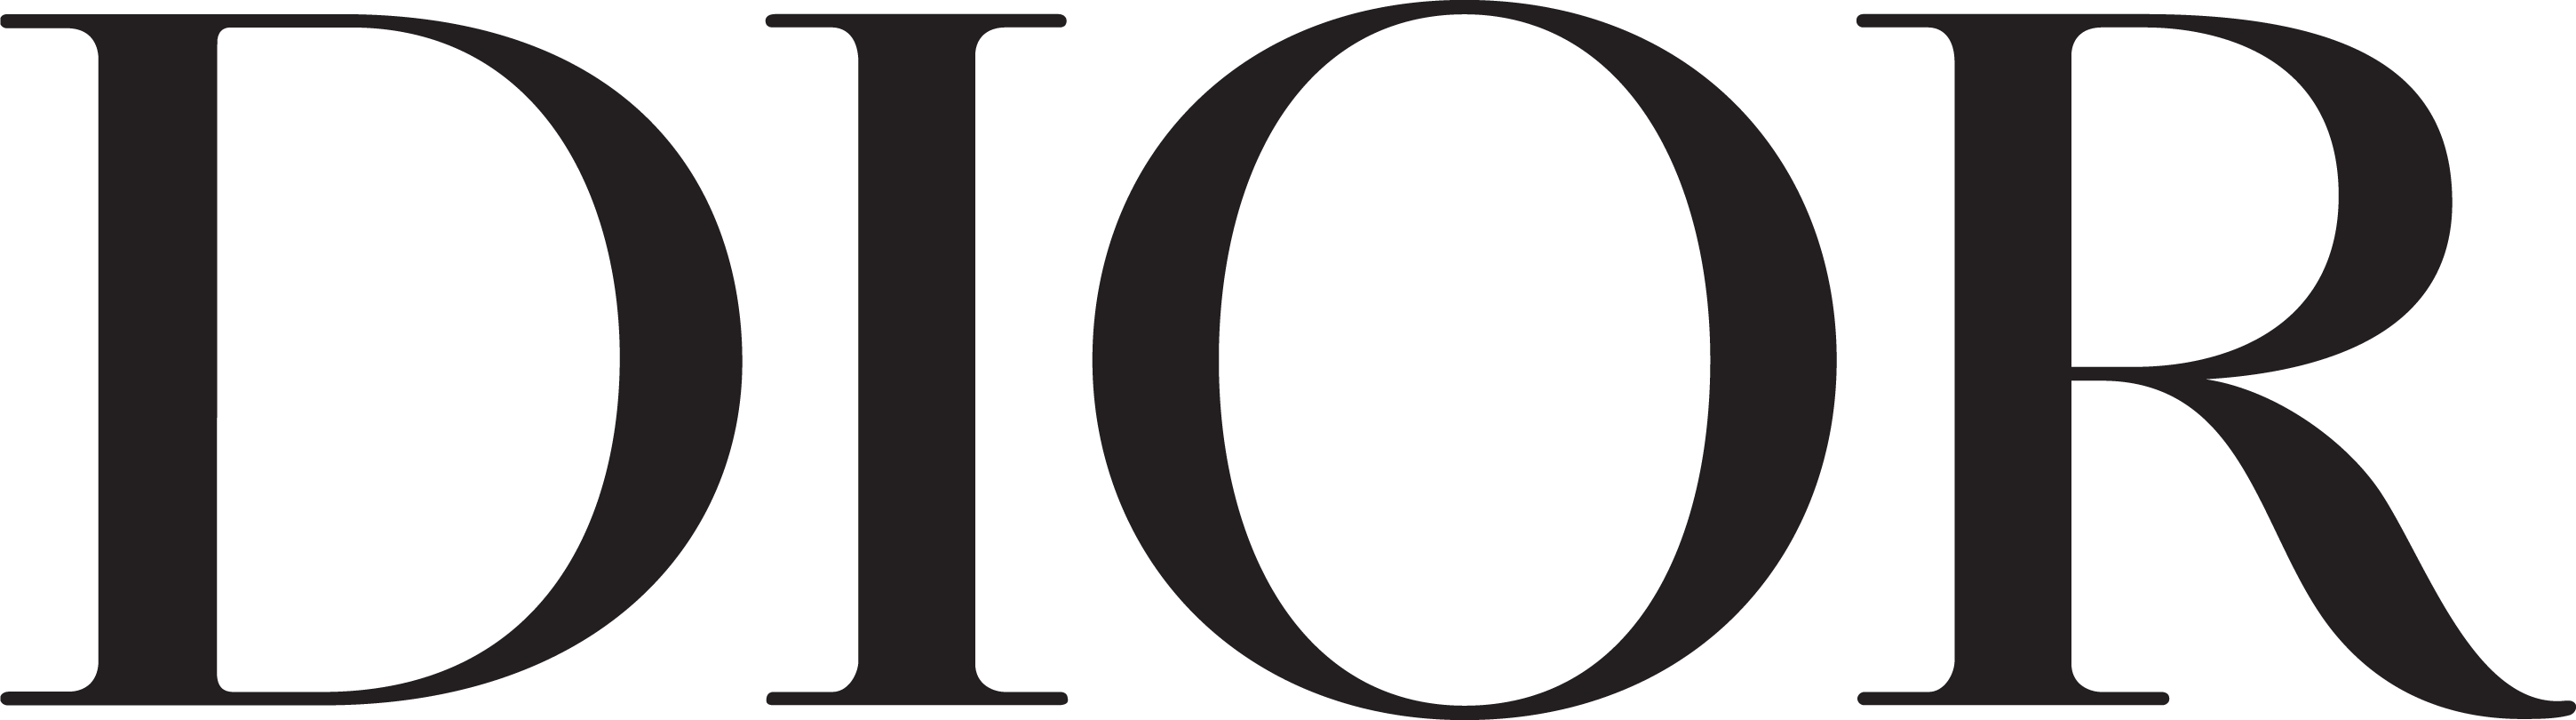 Dior Logo PNG File